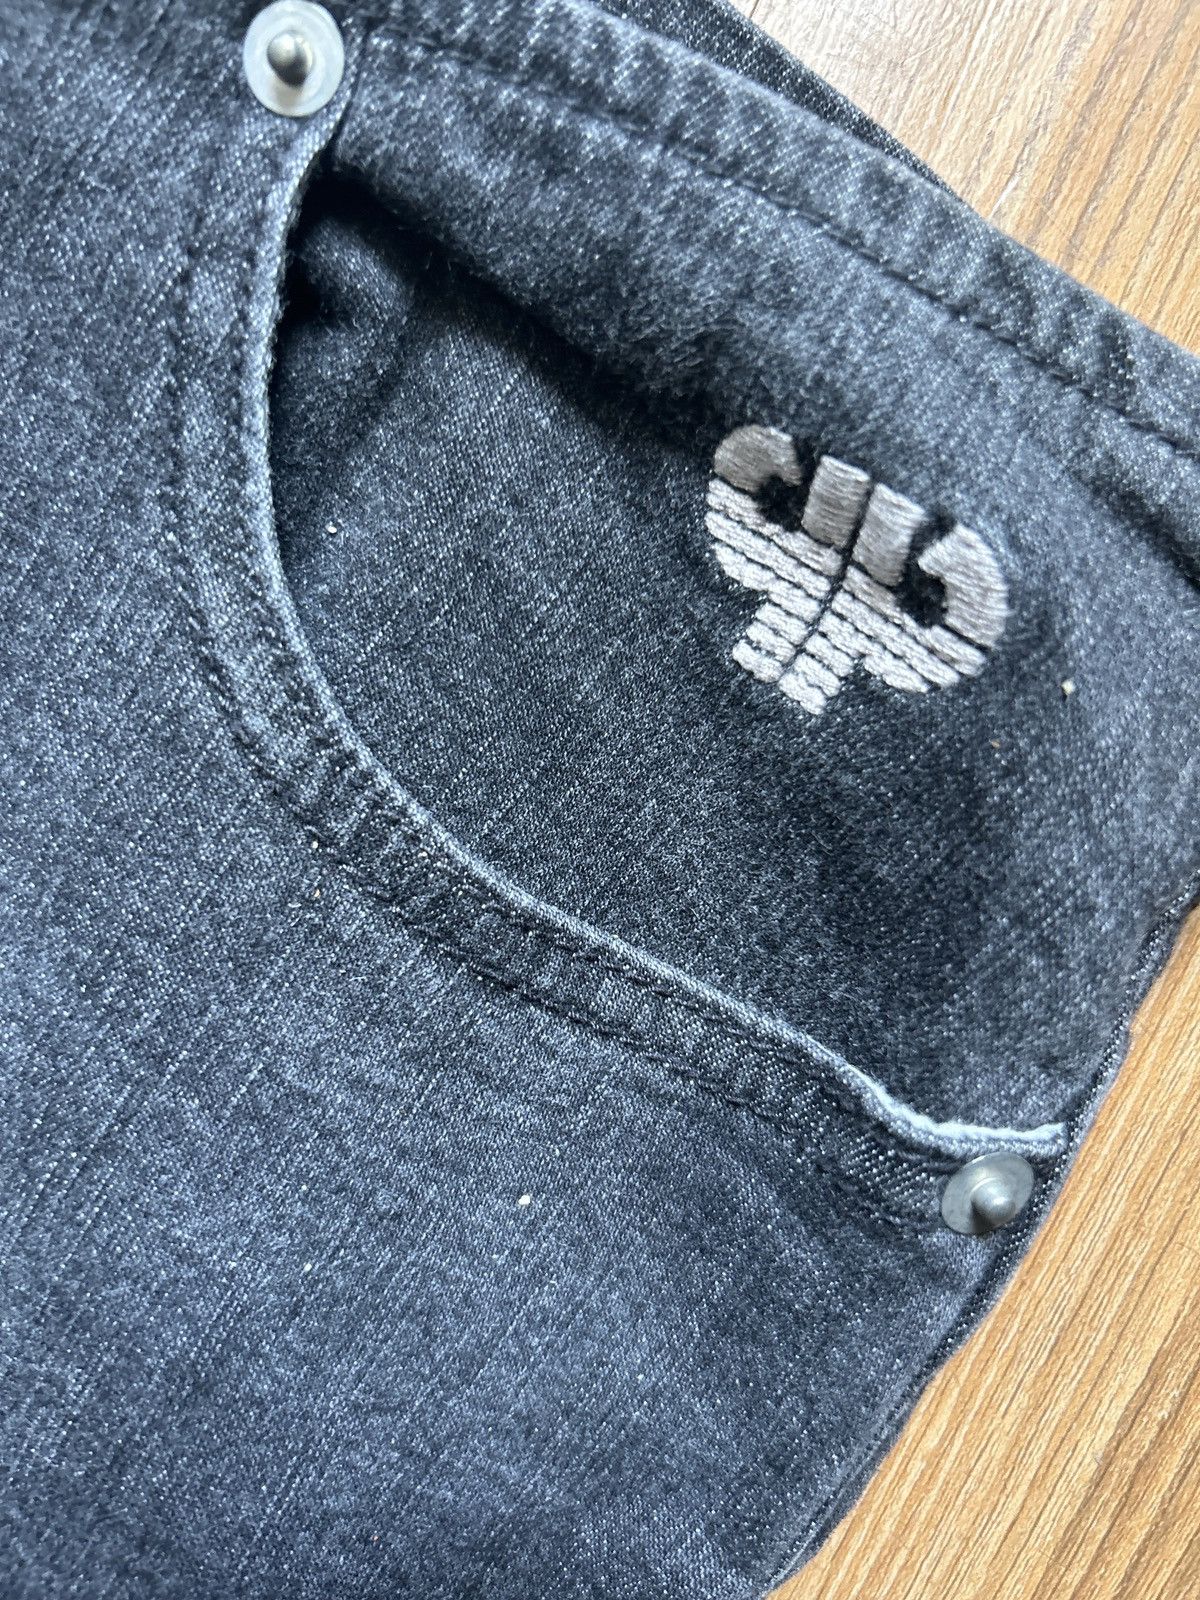 Vintage Vintage Y2K Pelle Pelle Washed Denim Lace-Up Jeans Size US 34 / EU 50 - 4 Preview